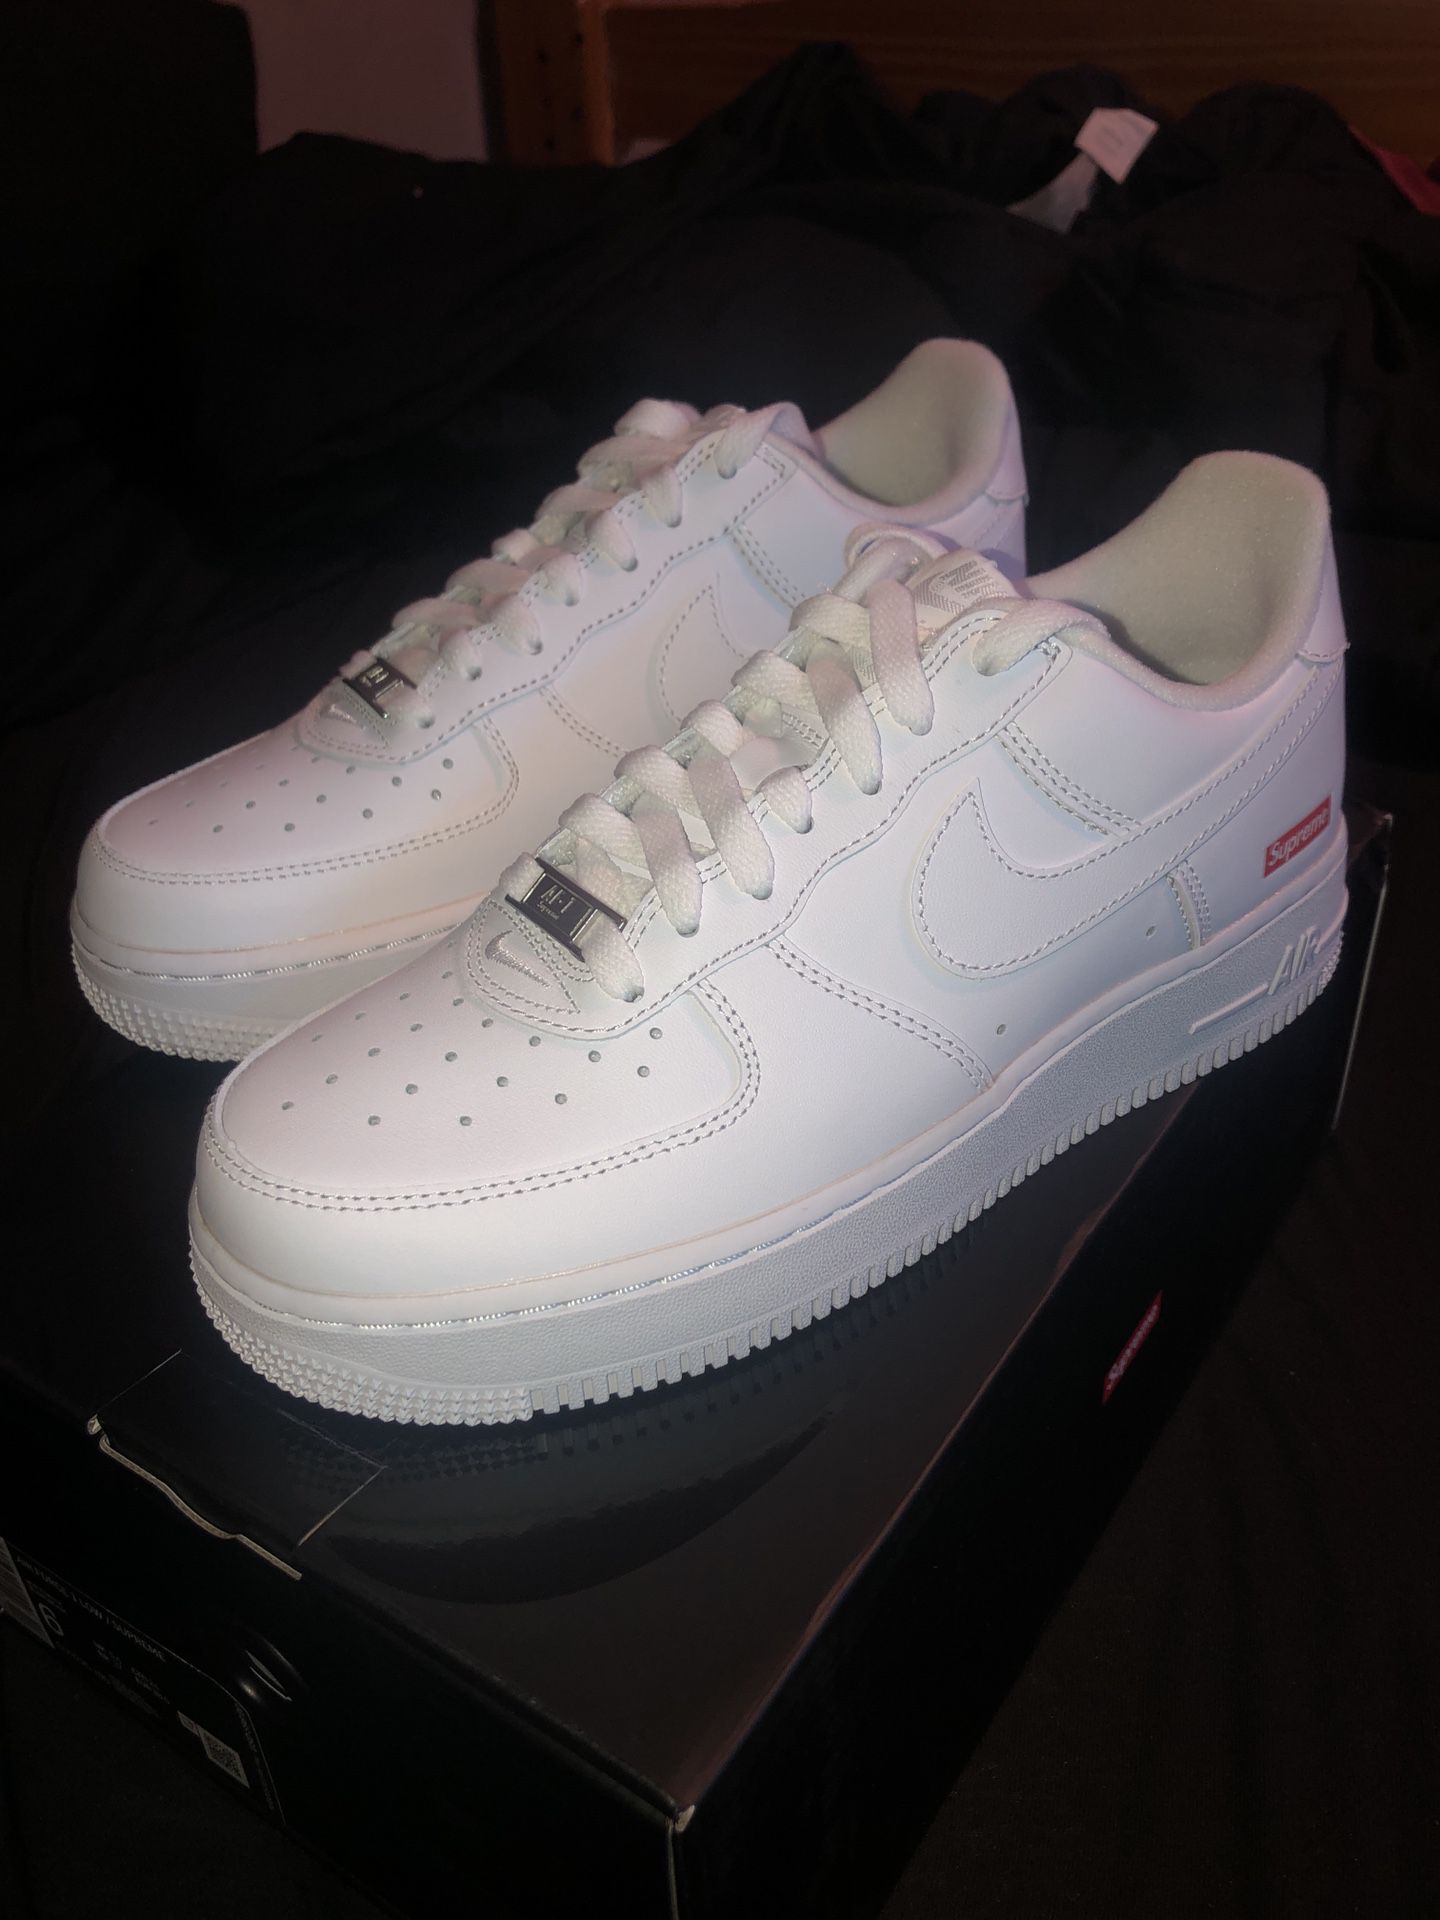 Supreme/Nike Air Force 1 “White” *Size 6*